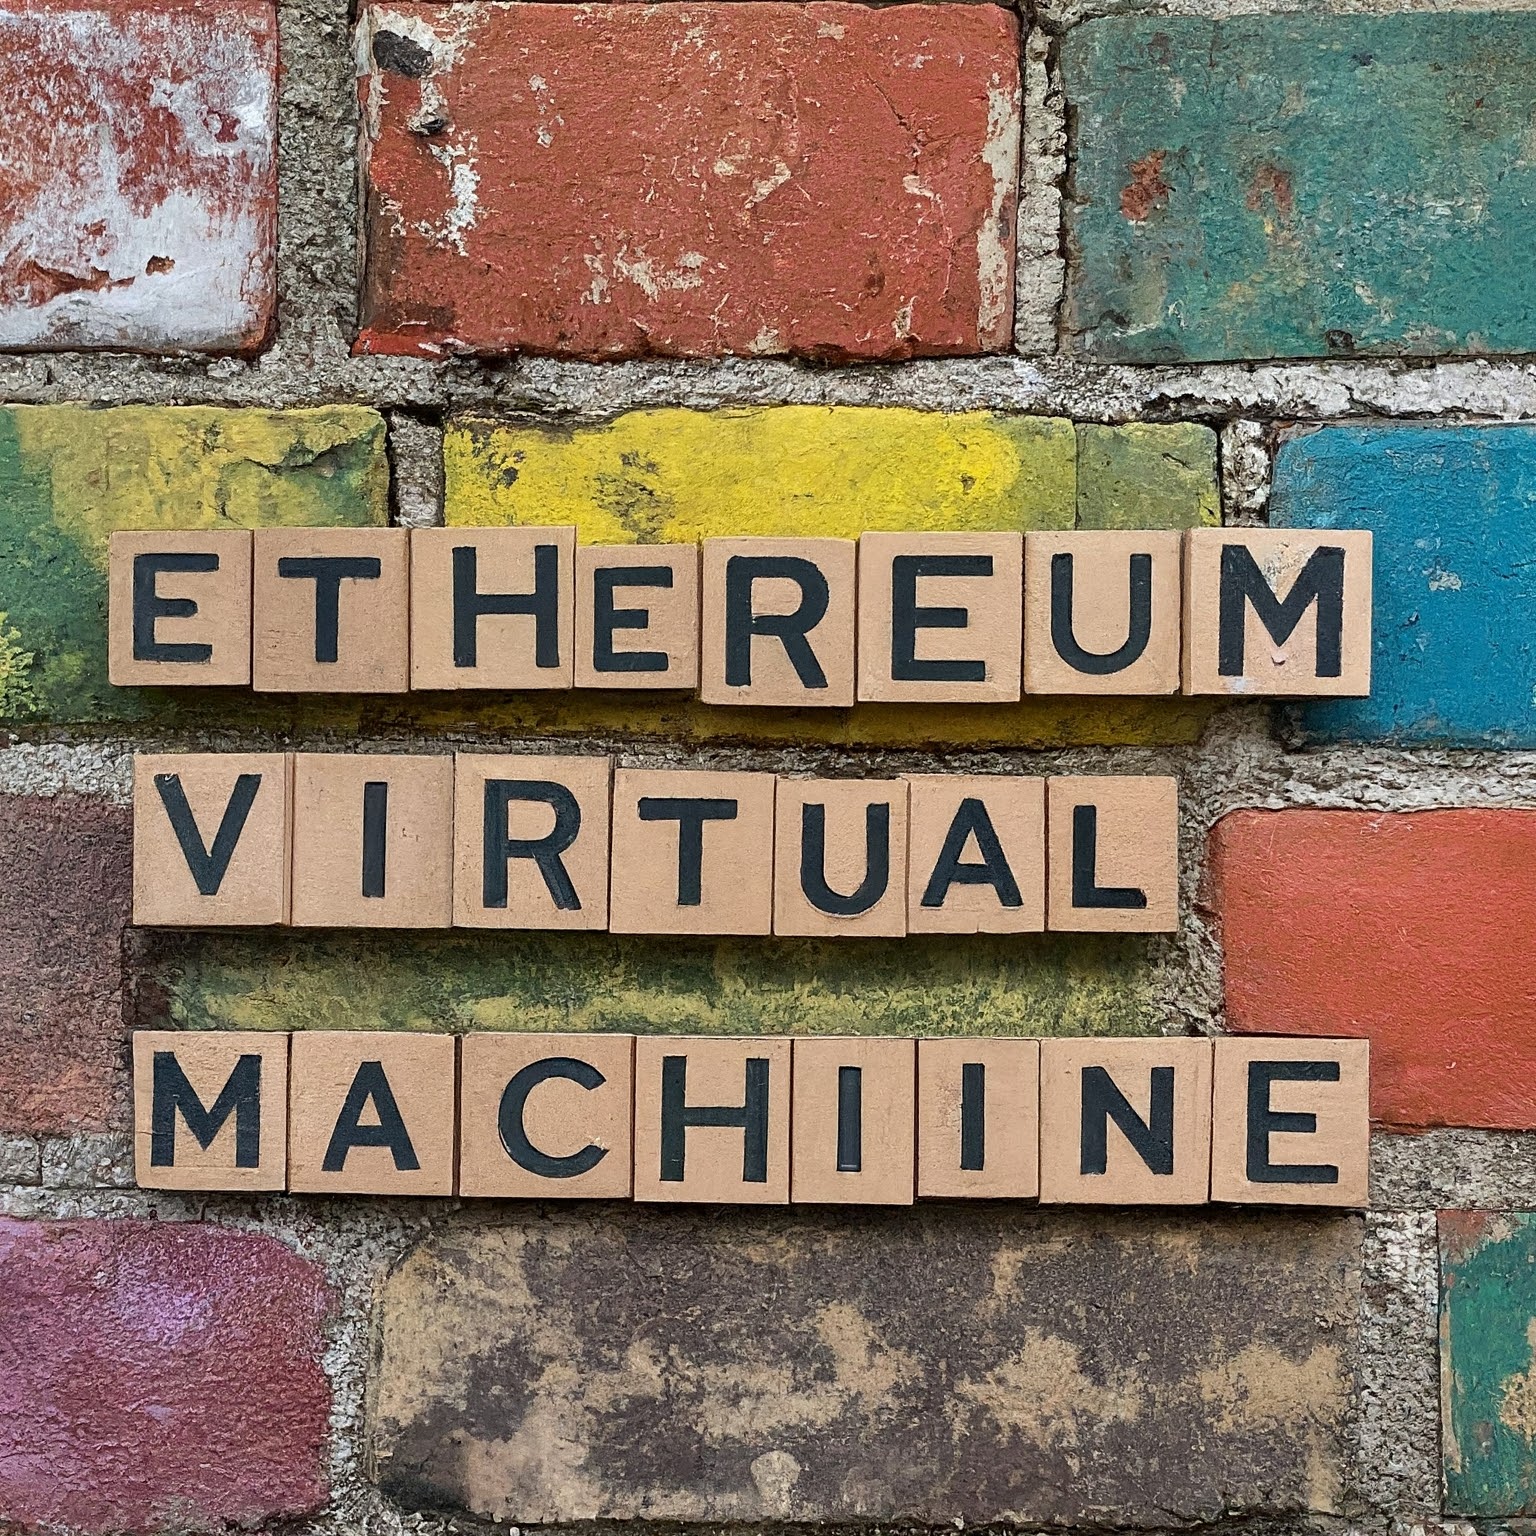 What is Ethereum Virtual Machine (EVM) in Blockchain?